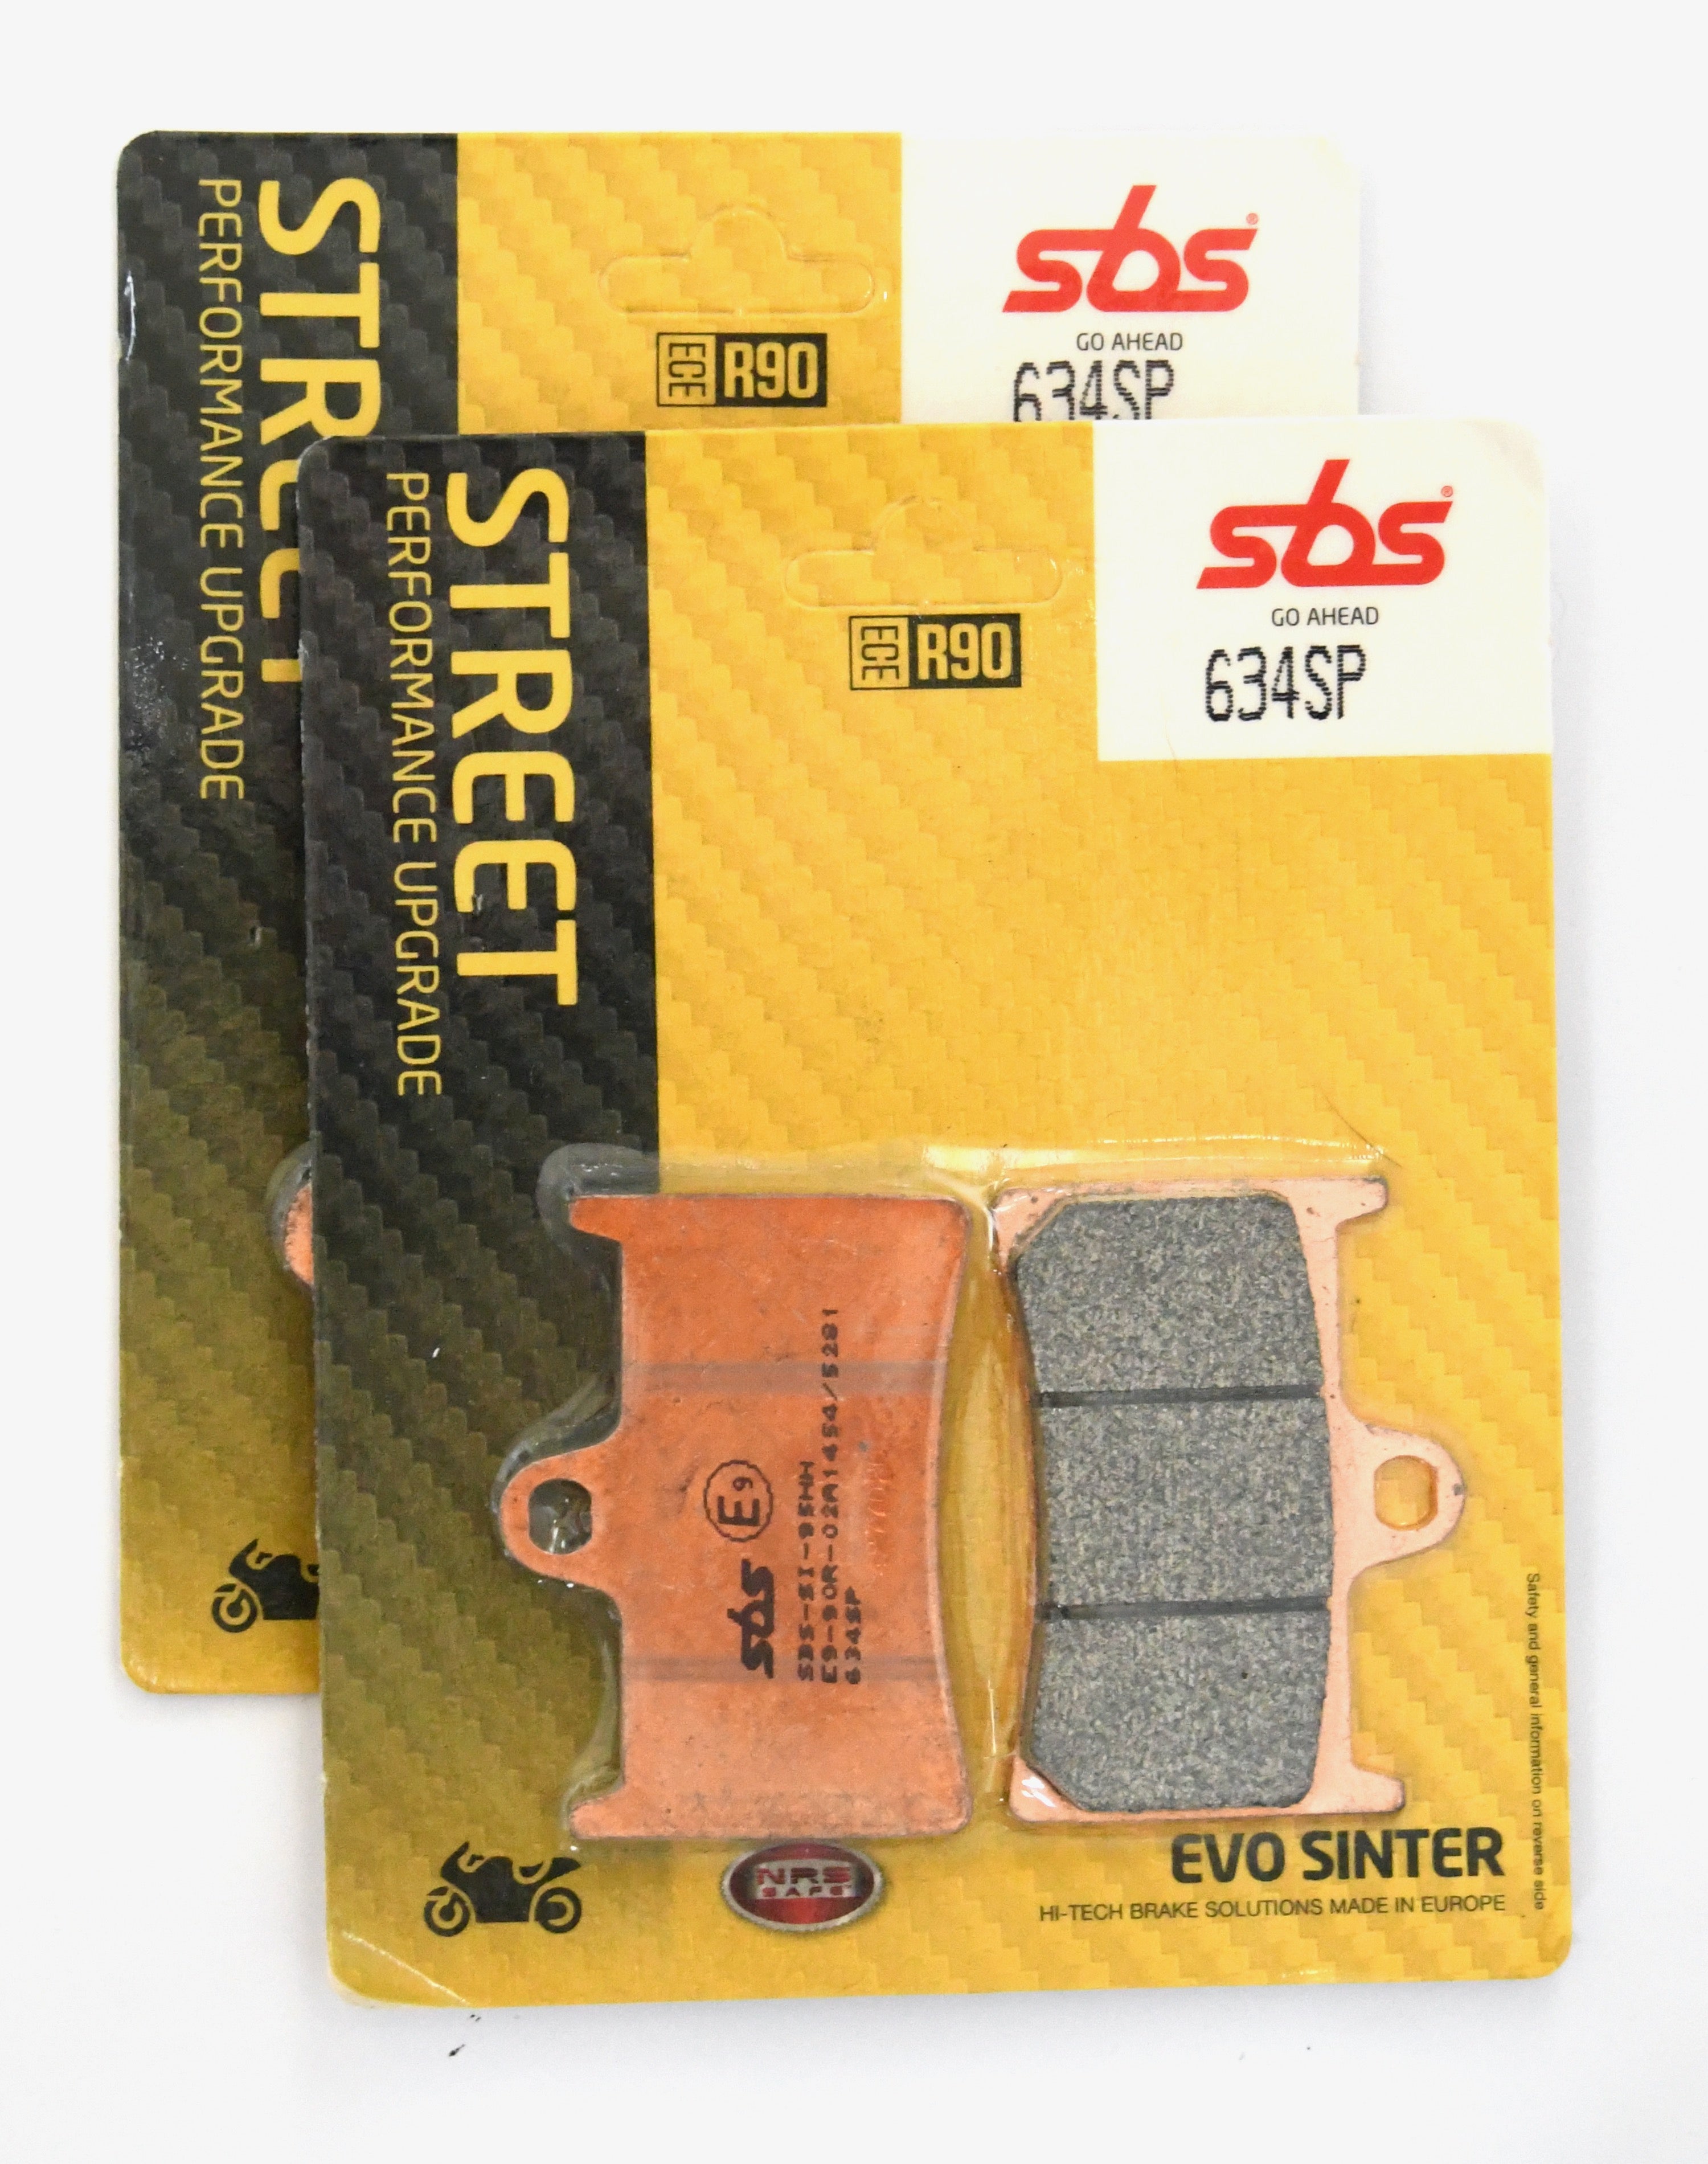 SBS 634SP Evo Sinter (Performance Upgrade) Brake Pads (Full Front Set)